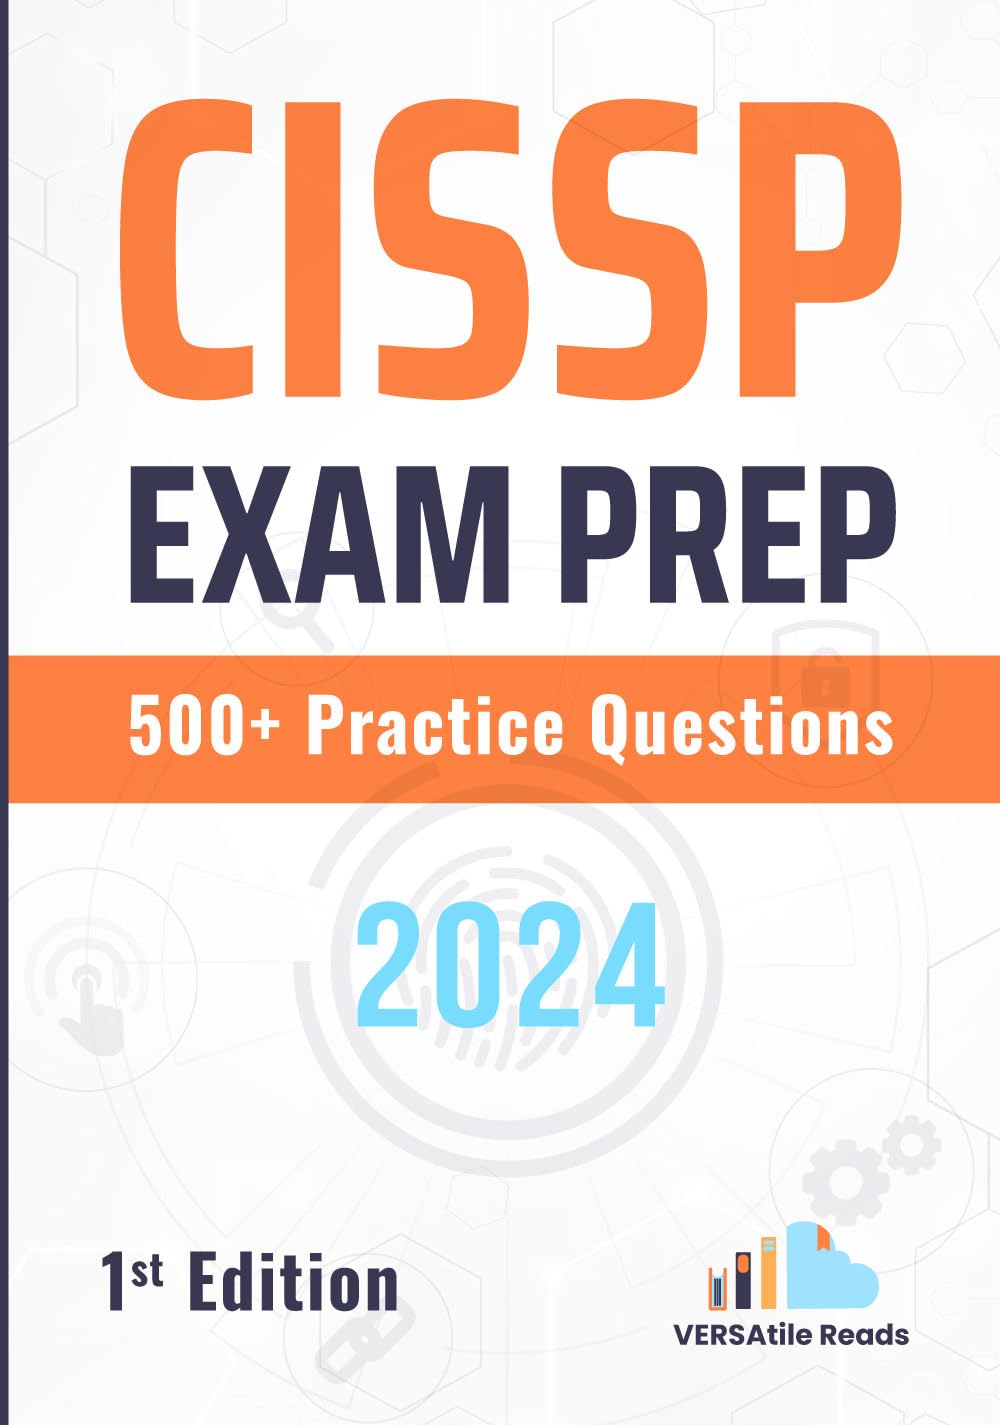 CISSP Exam Prep 500+ Practice Questions